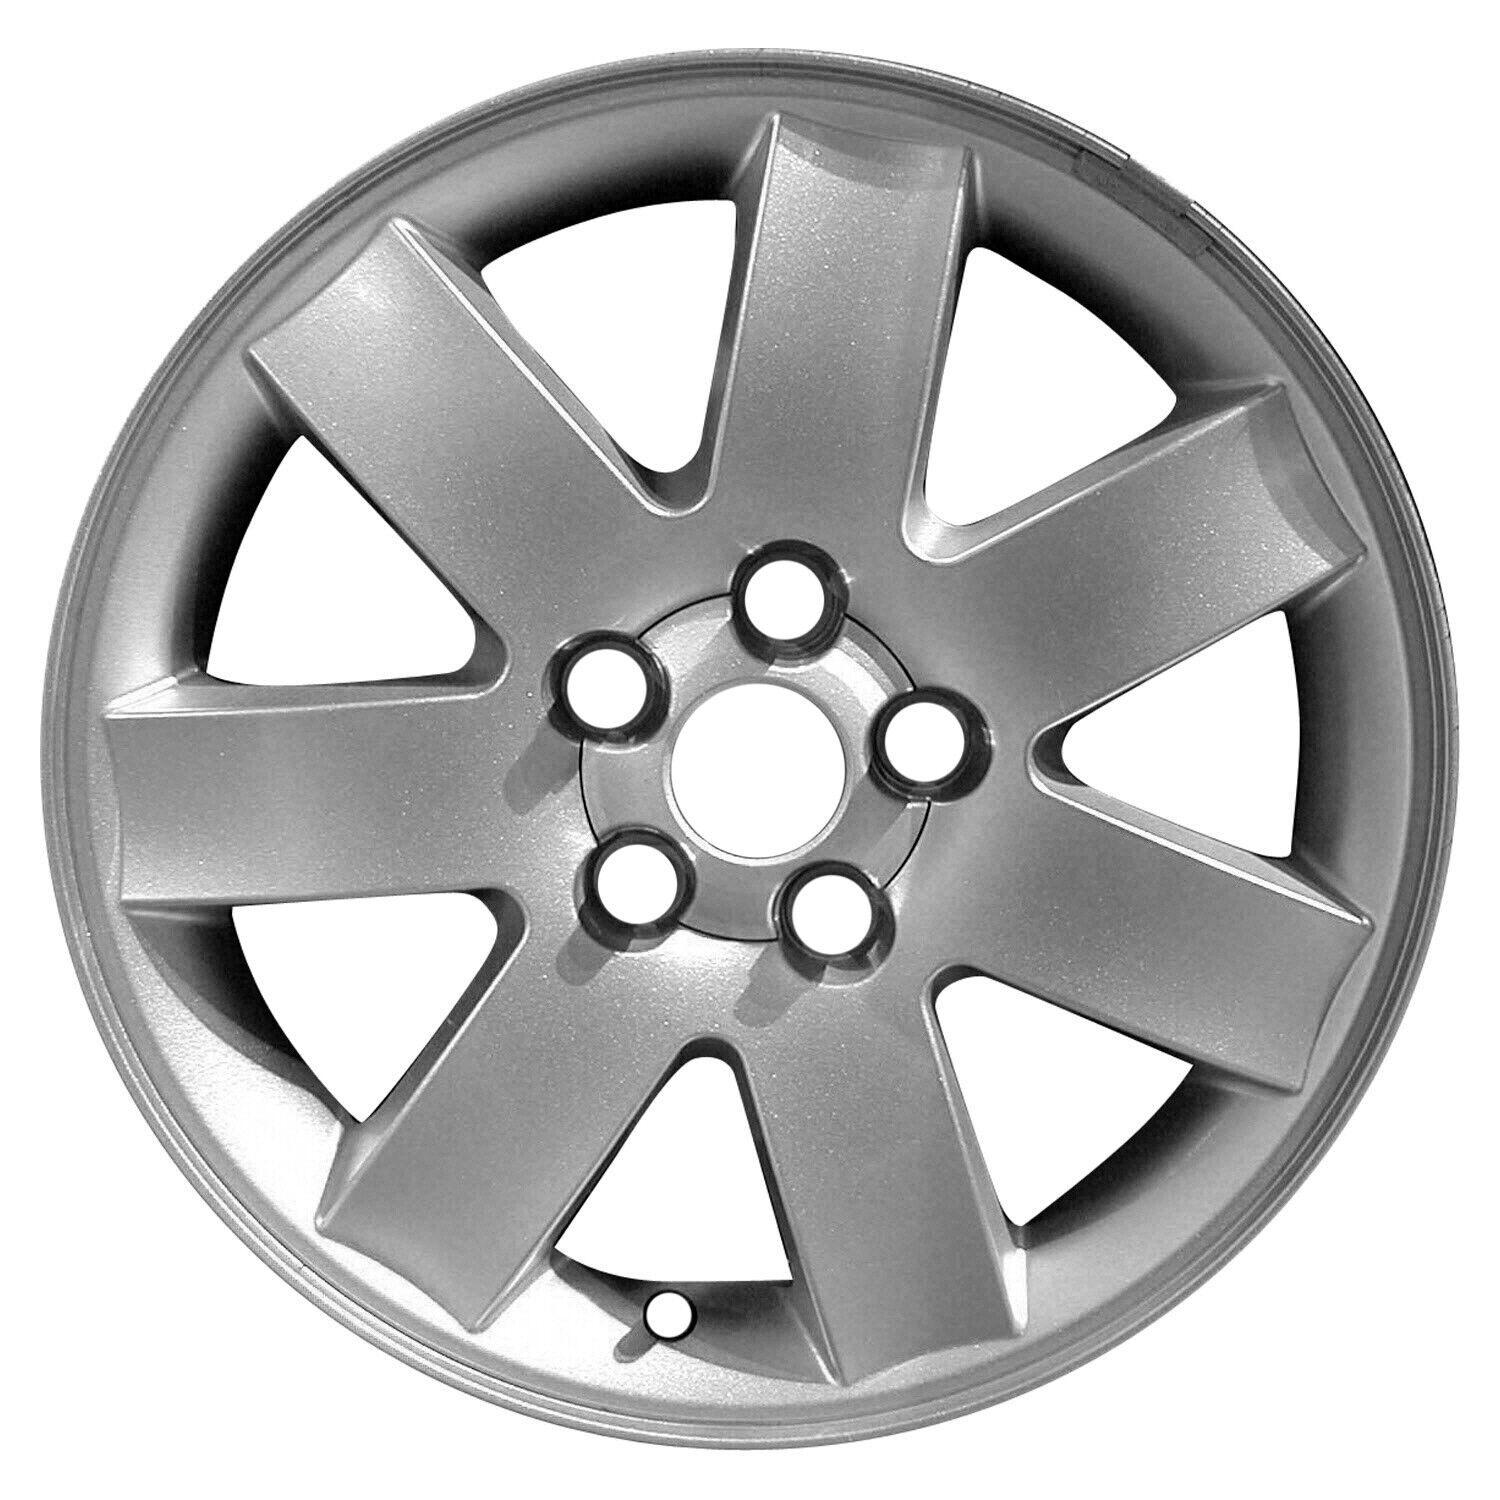 03580 Reconditioned OEM Aluminum Wheel 17x7 fits 2005-2007 Mercury Montego